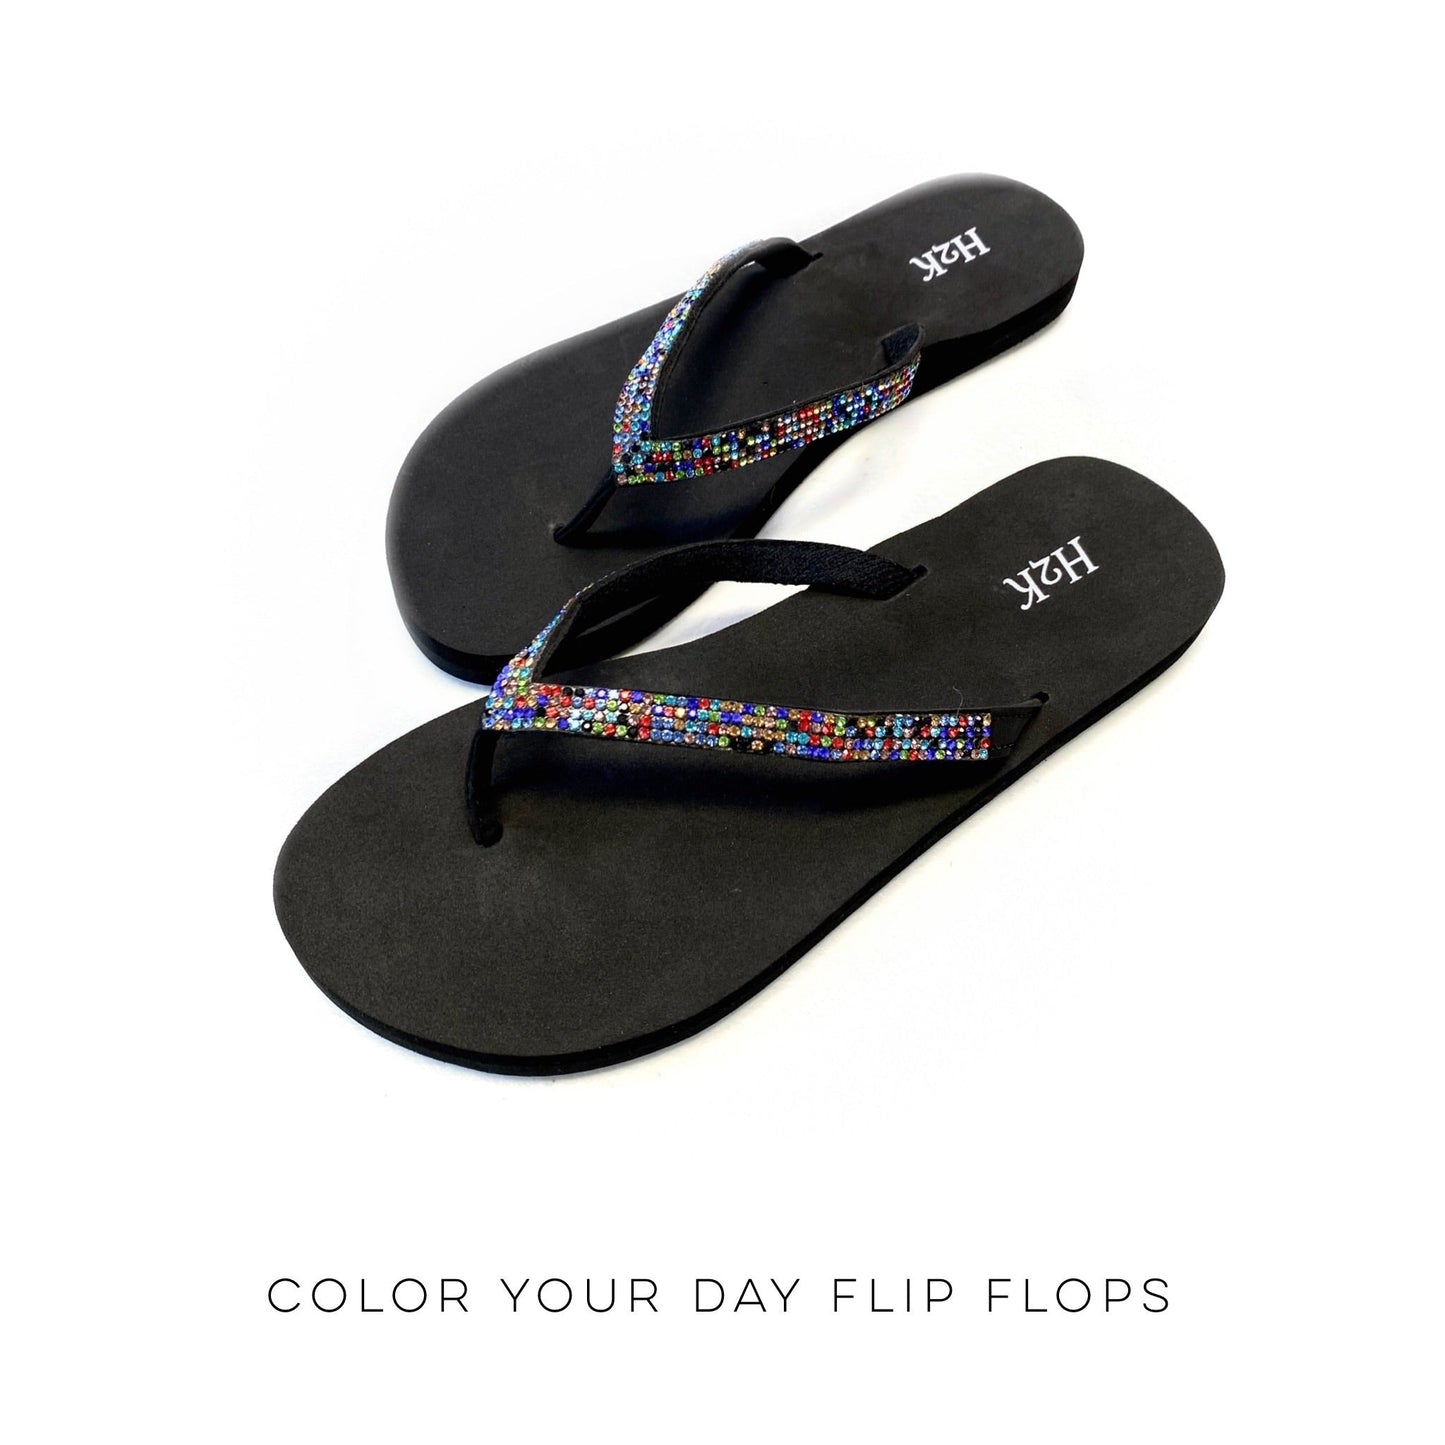 Color Your Day Flip Flops